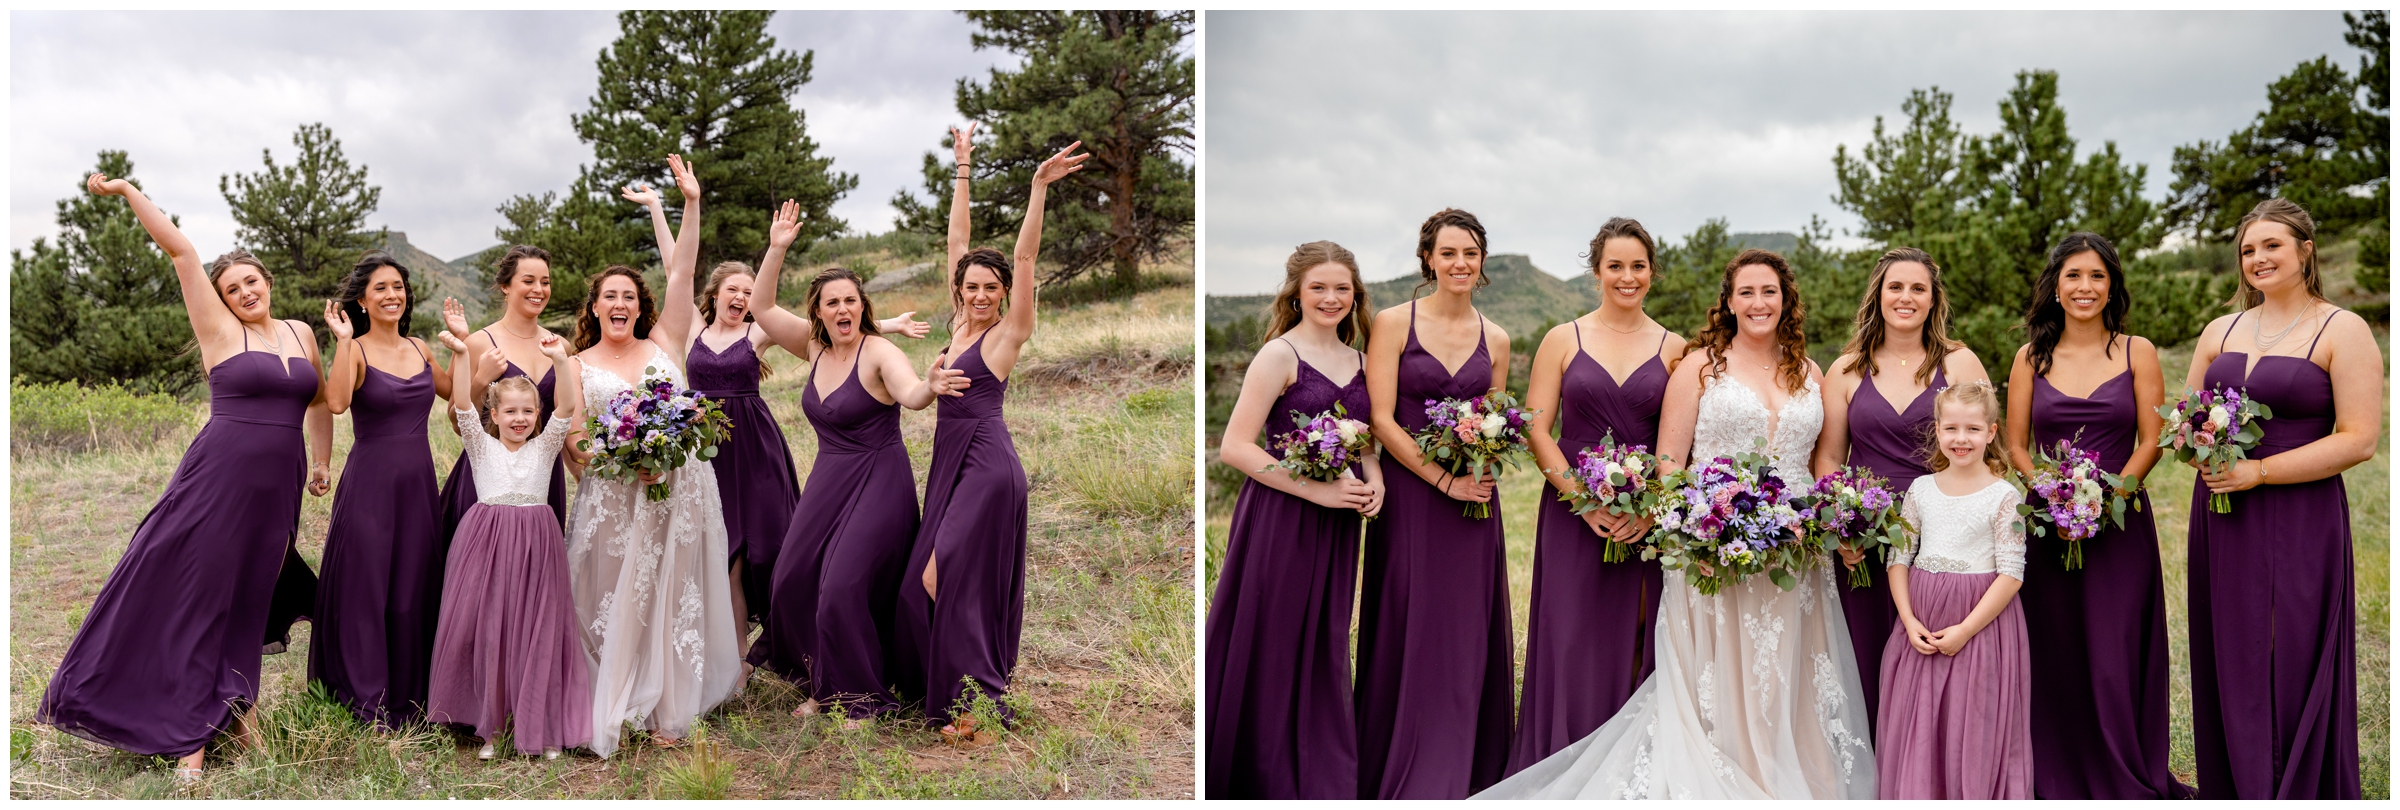 bridesmaids in long purple dresses